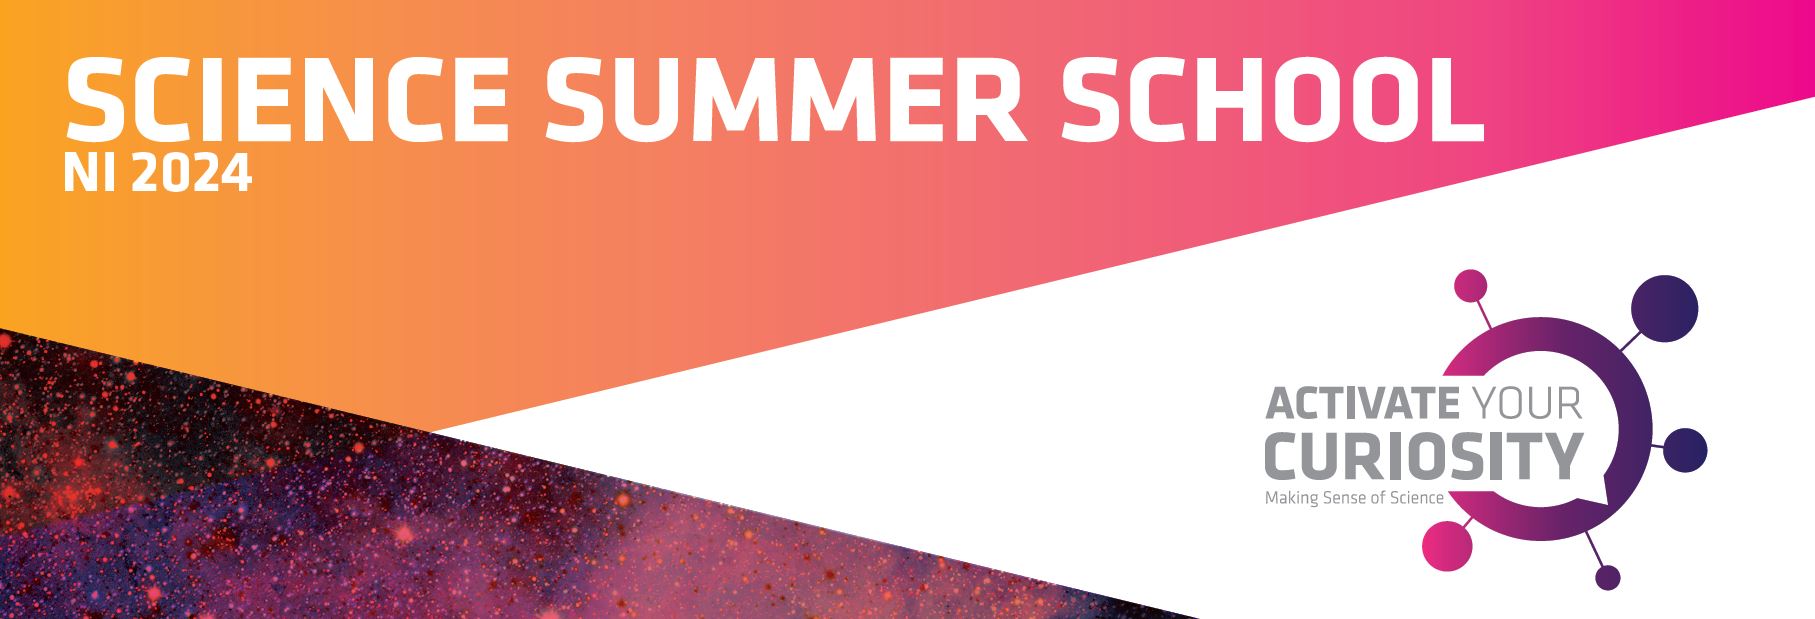 Science Summer School